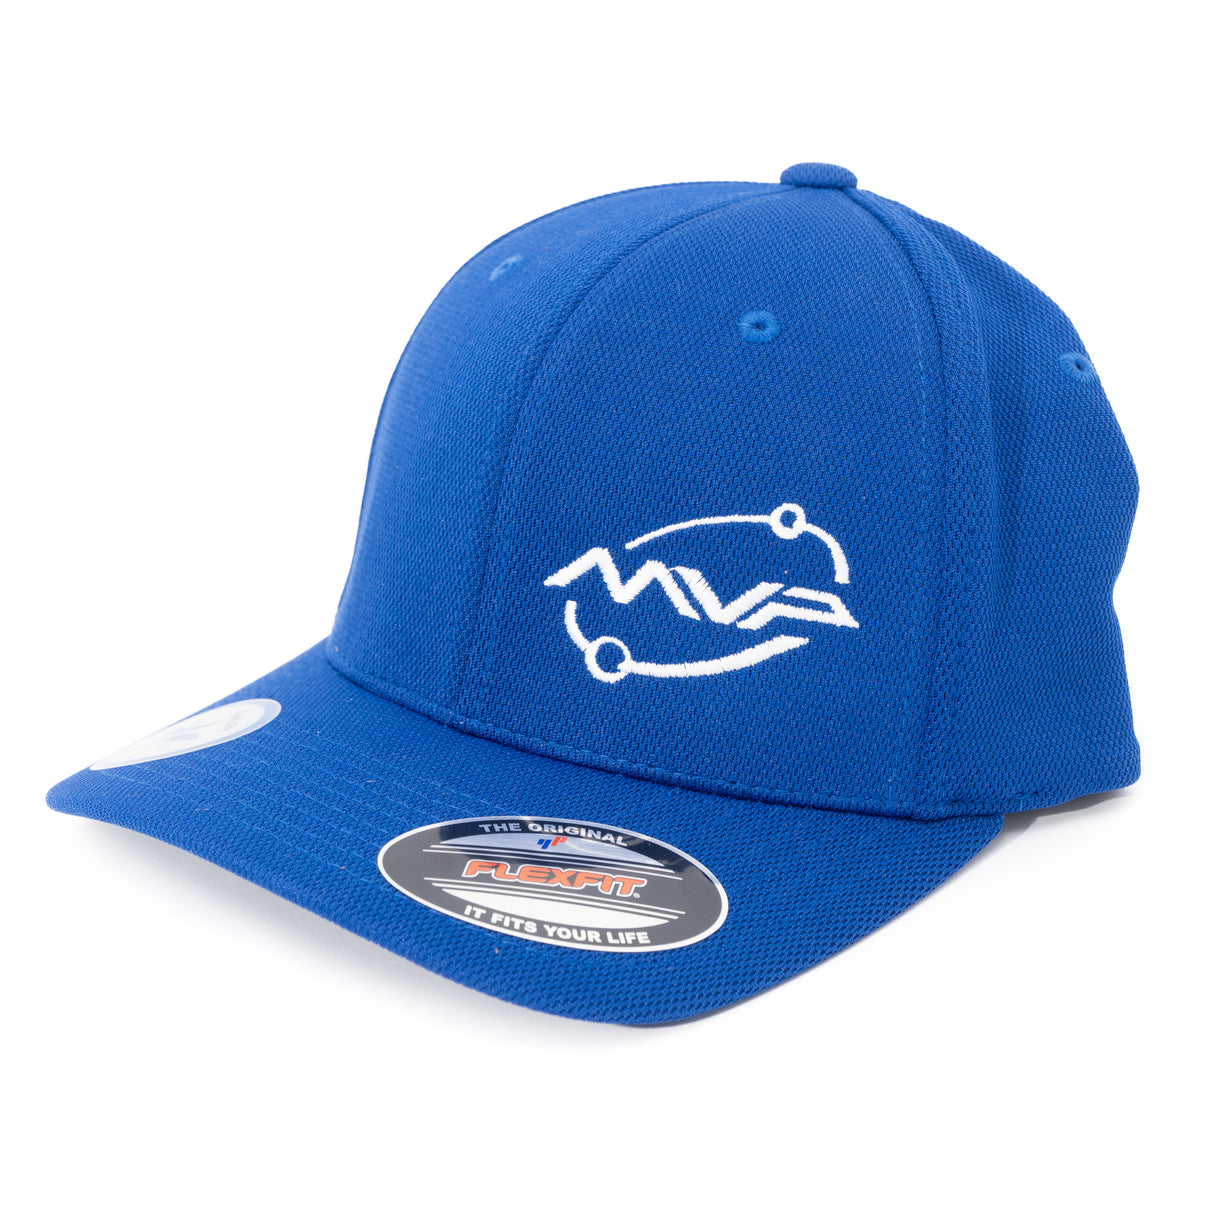 MVP FlexFit Cool-Dry Hat